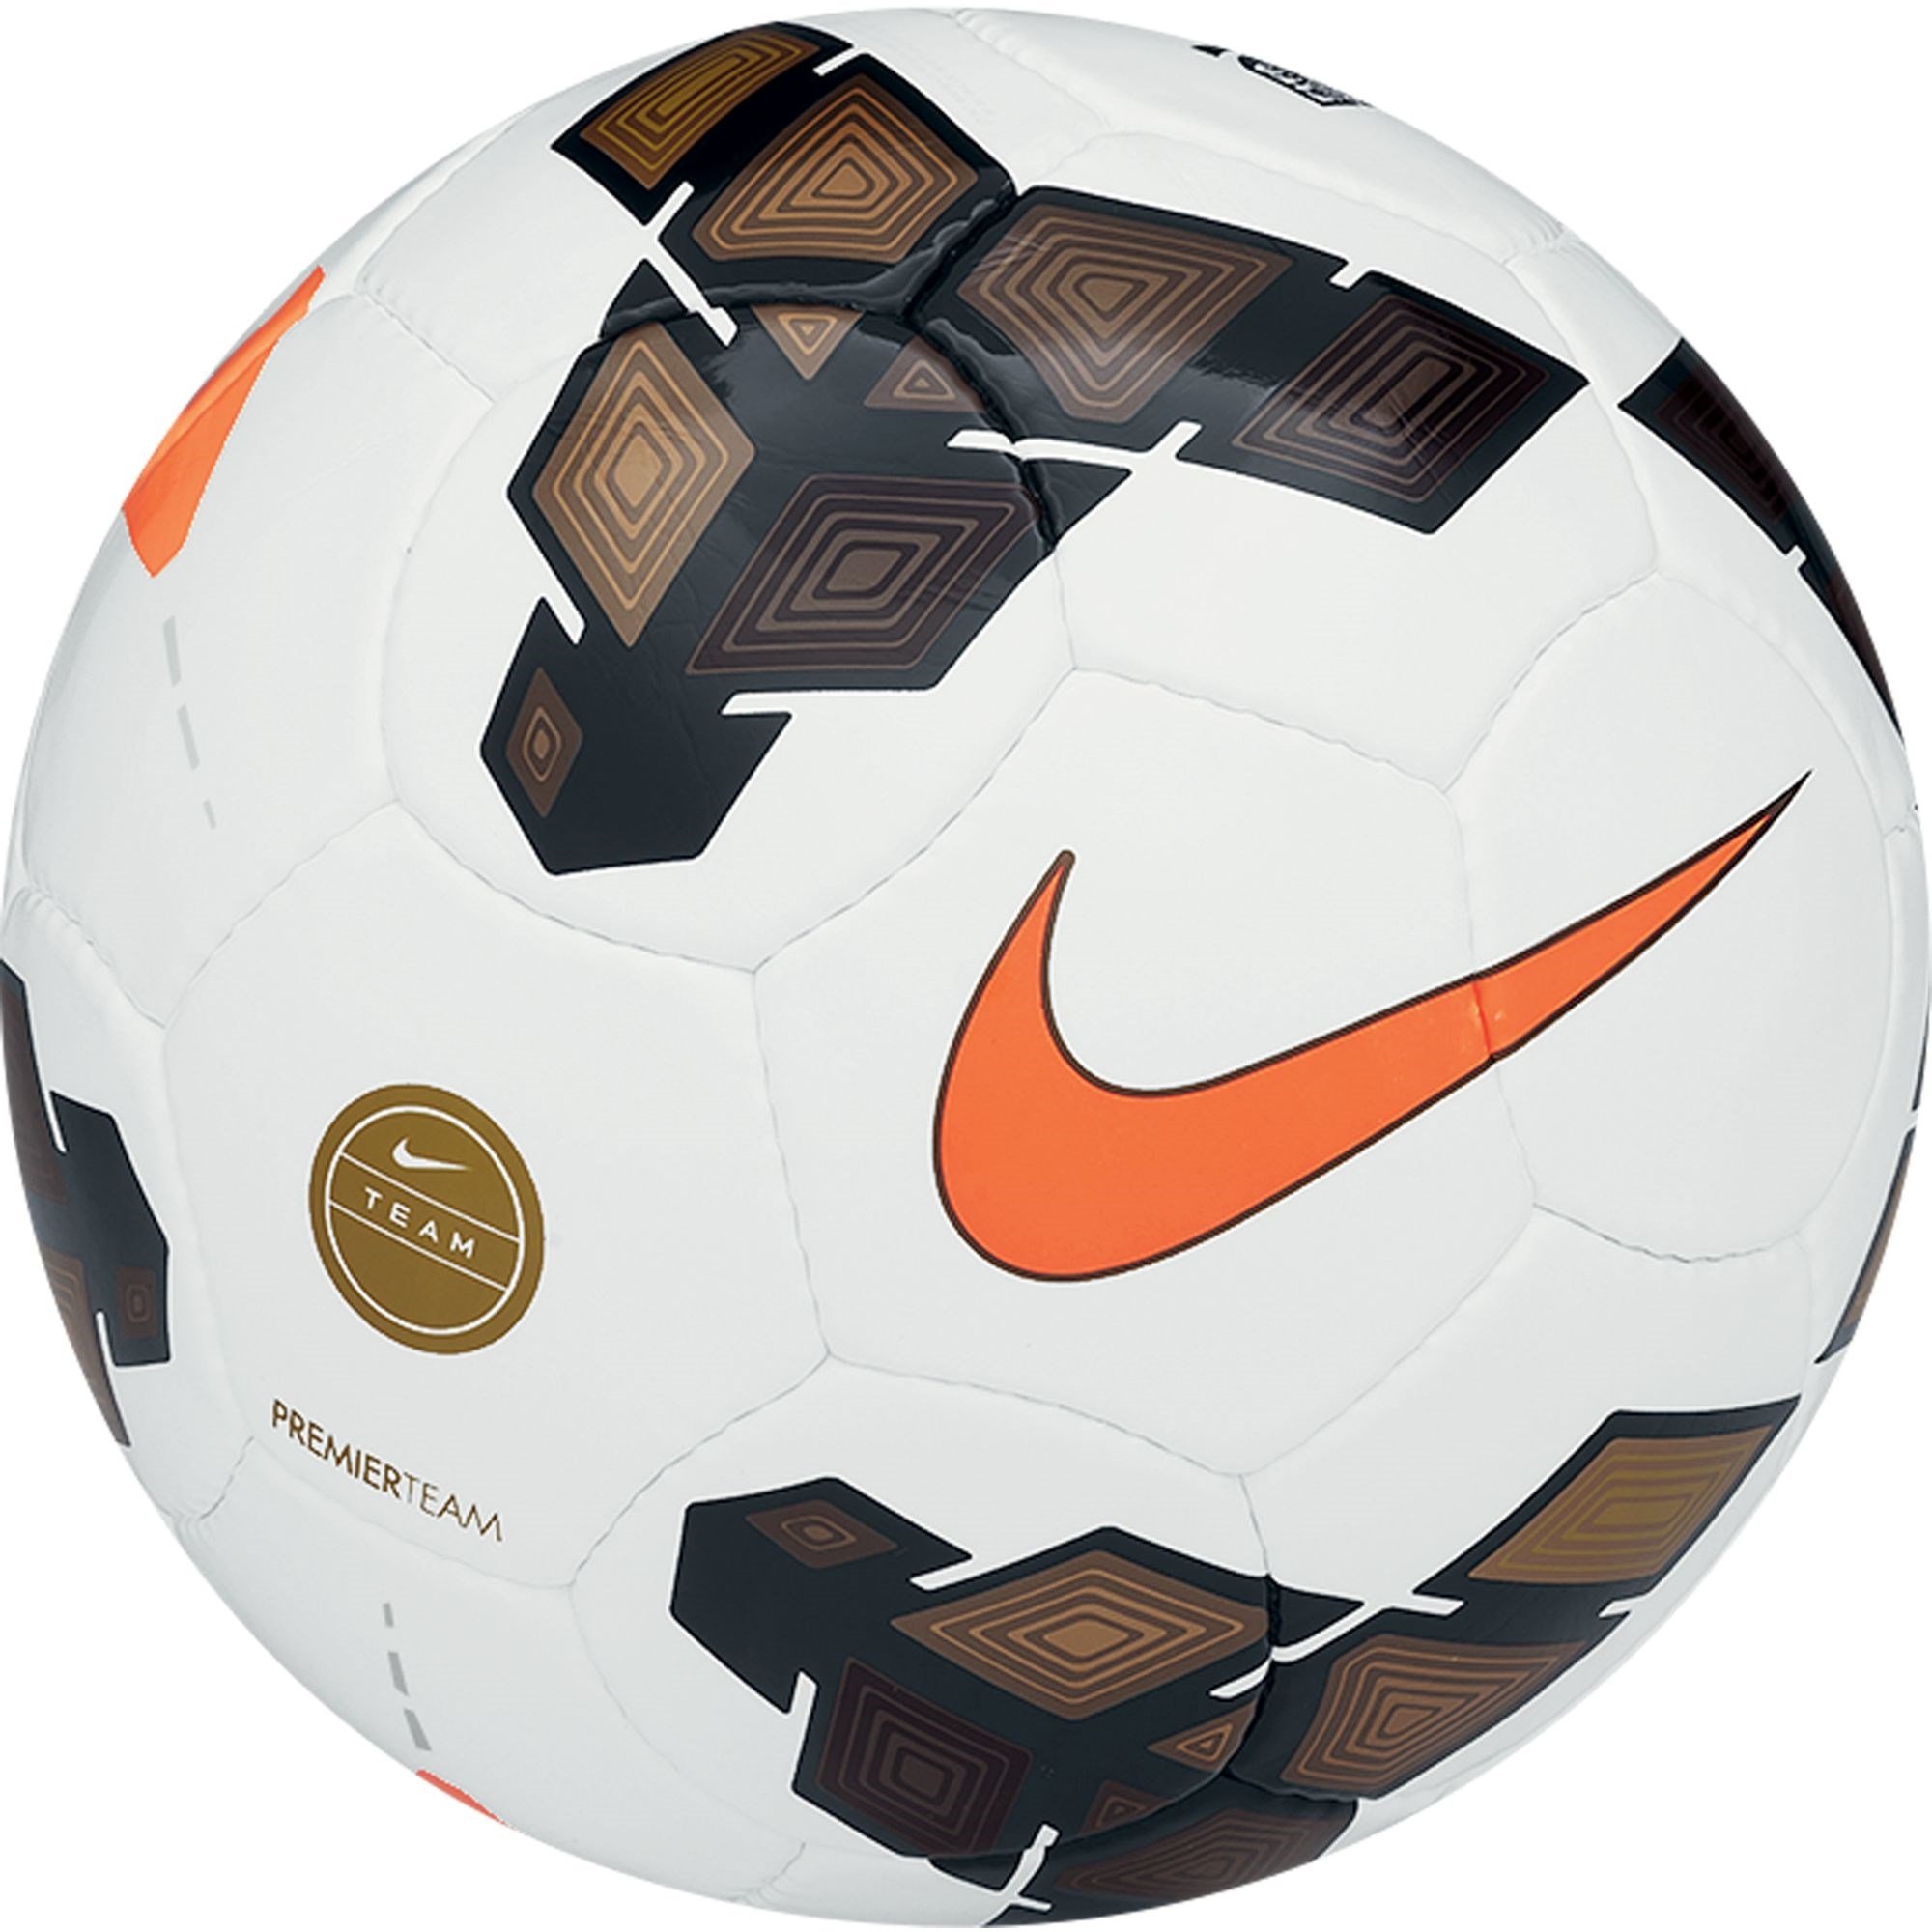 NIKE PREMIER TEAM FIFA - NIKE 177 Ürün kodu: SC2274-177 | Etichet Sport